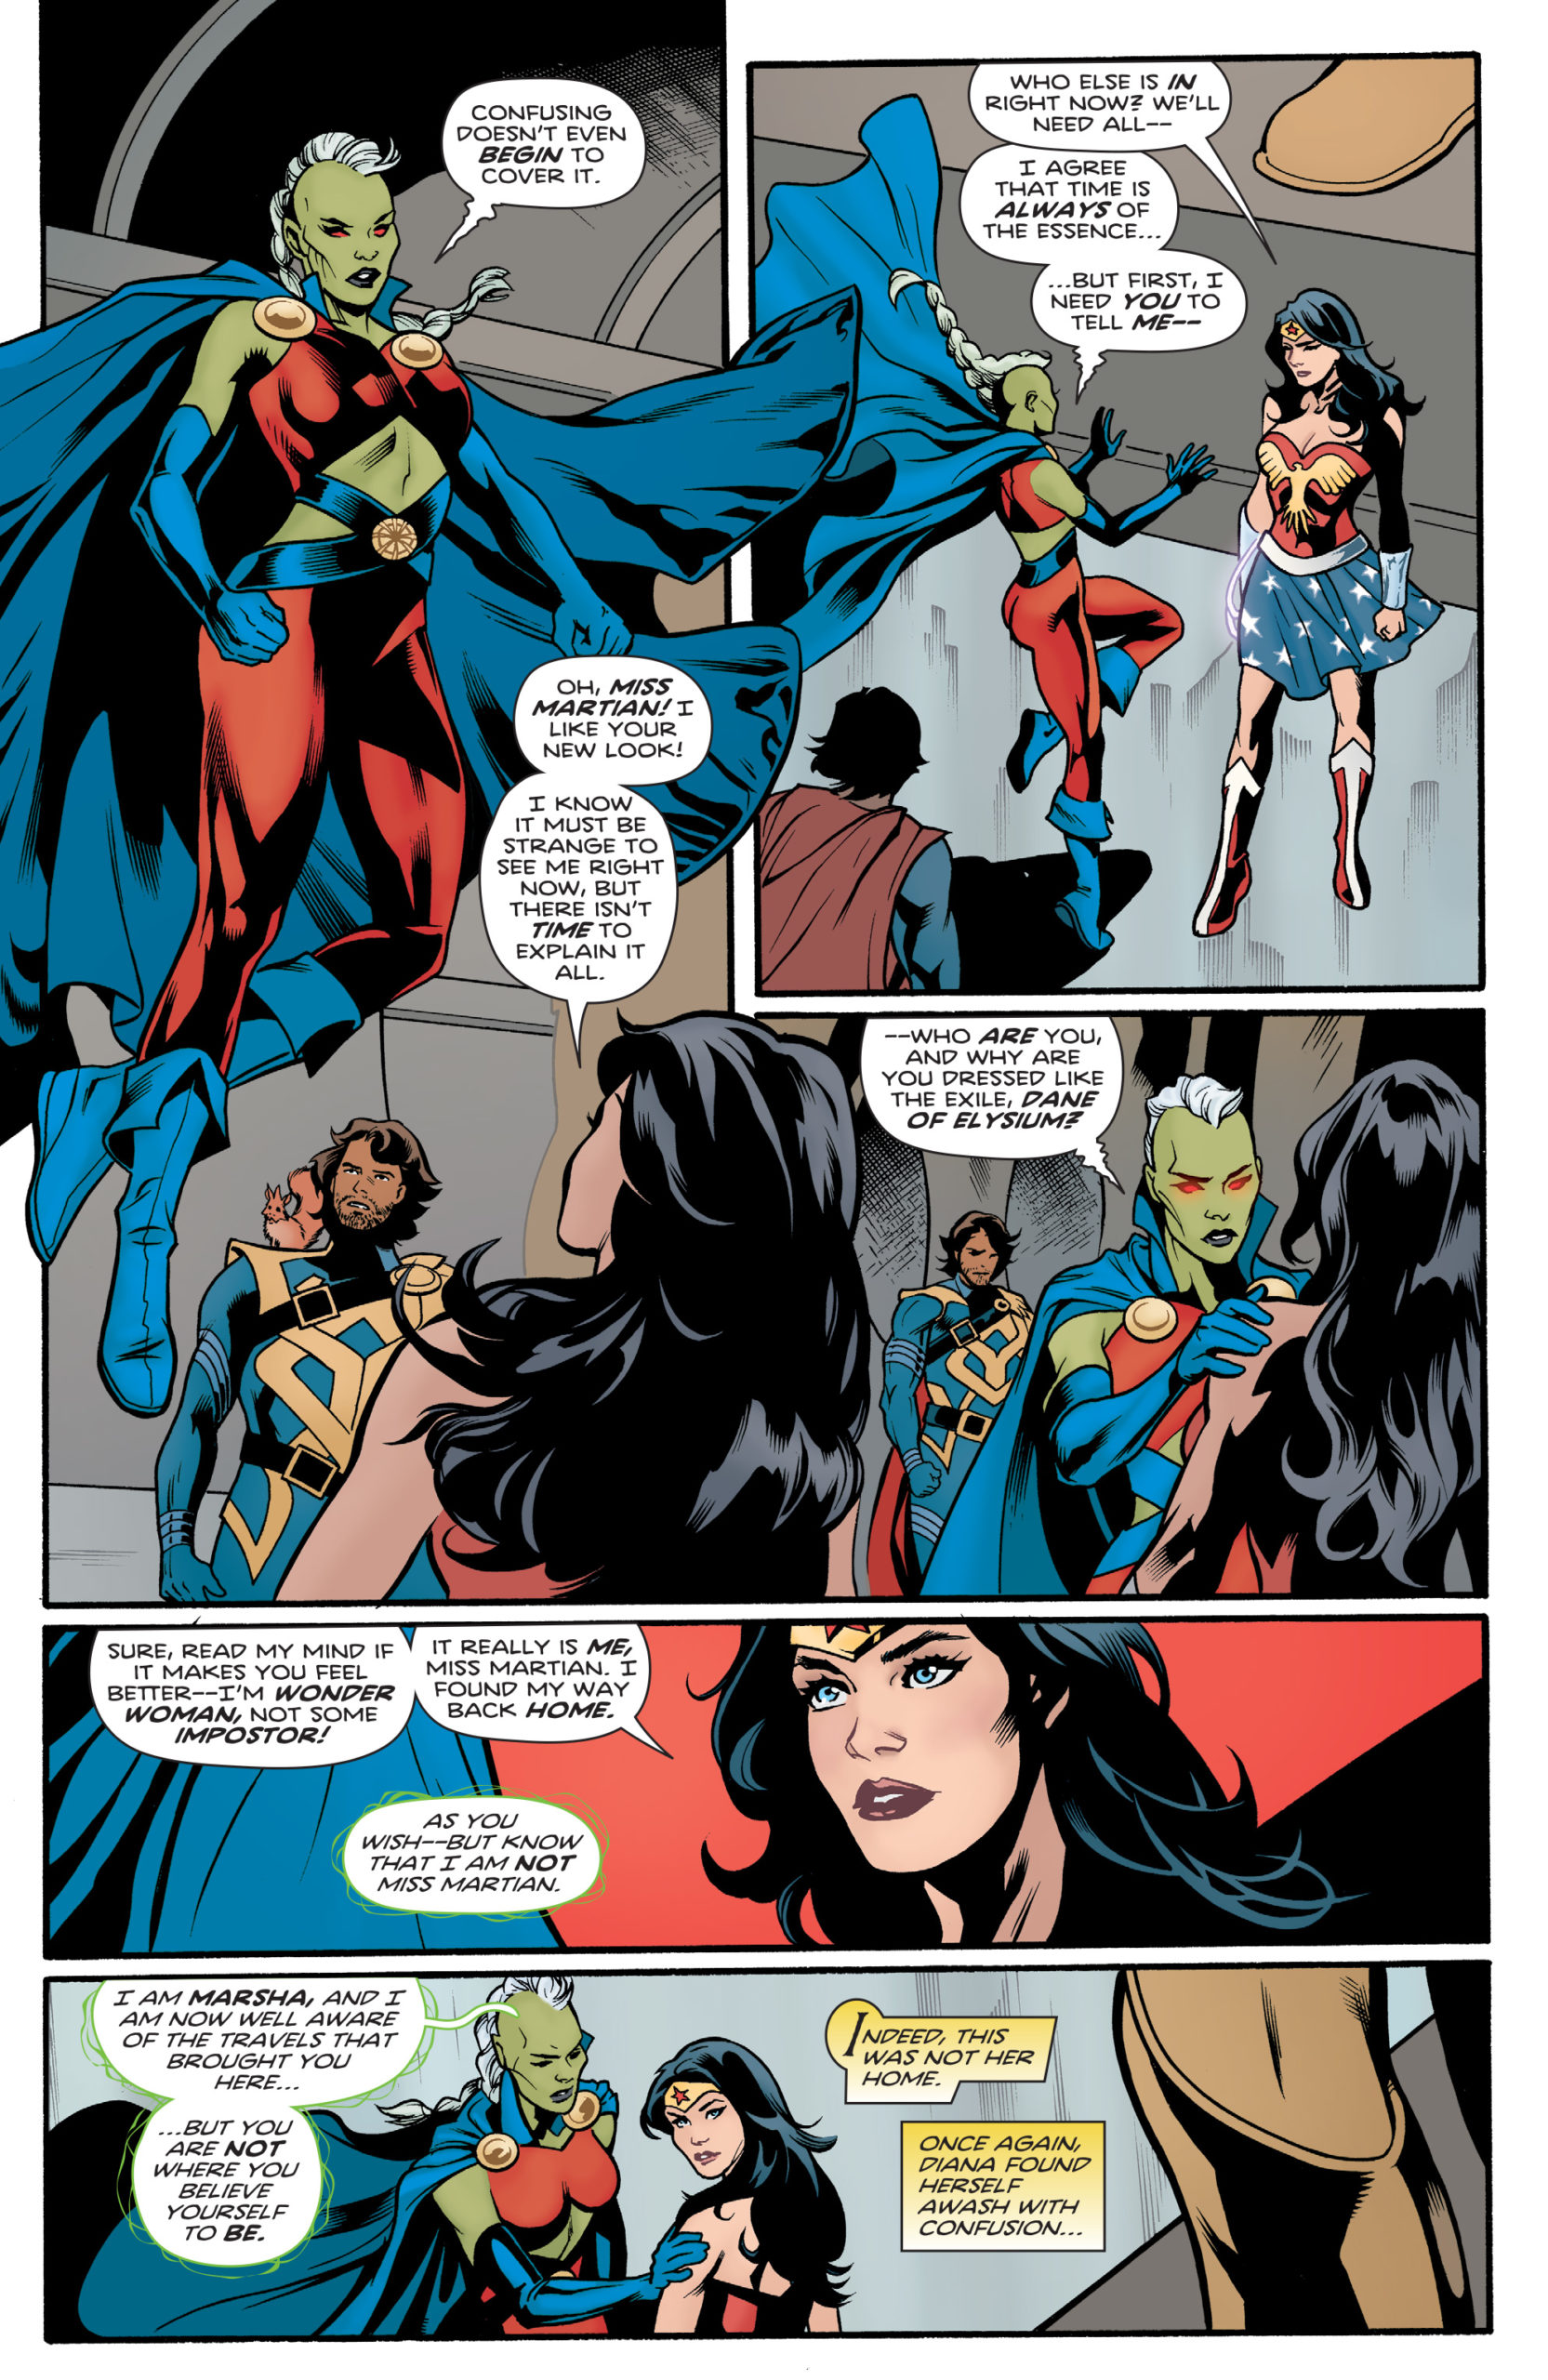 Wonder Woman 777 DC Comics News